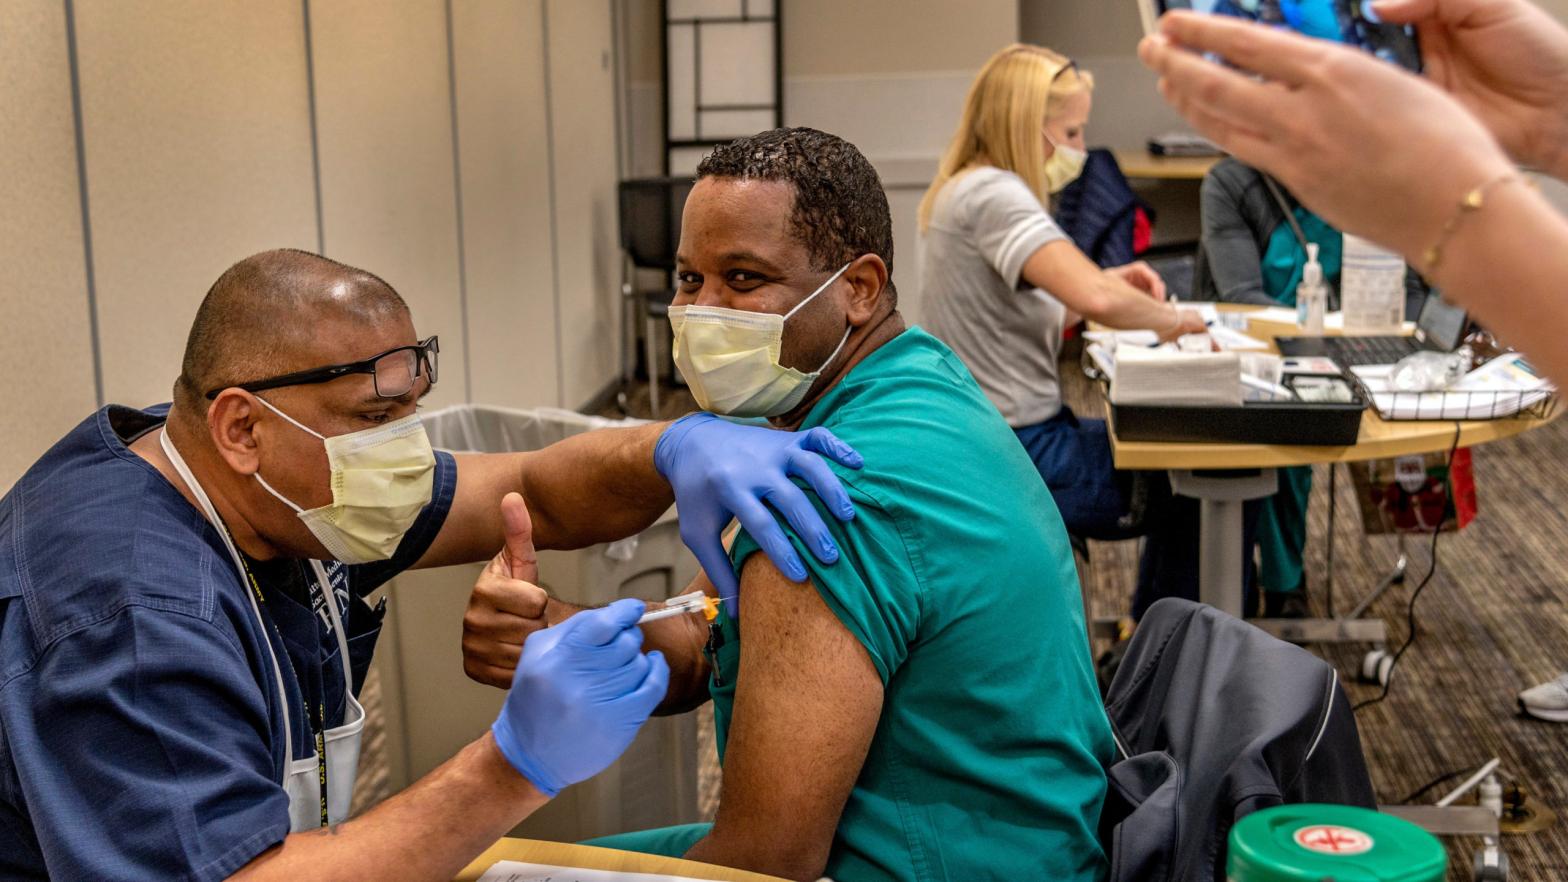 Nurse practitioner Robert McCary receives the Pfizer-BioNTech covia-19 vaccine at Sutter Medical Centre in Sacramento, California on Dec. 18, 2020. (Photo: Renée C. Byer/The Sacramento Bee, AP)